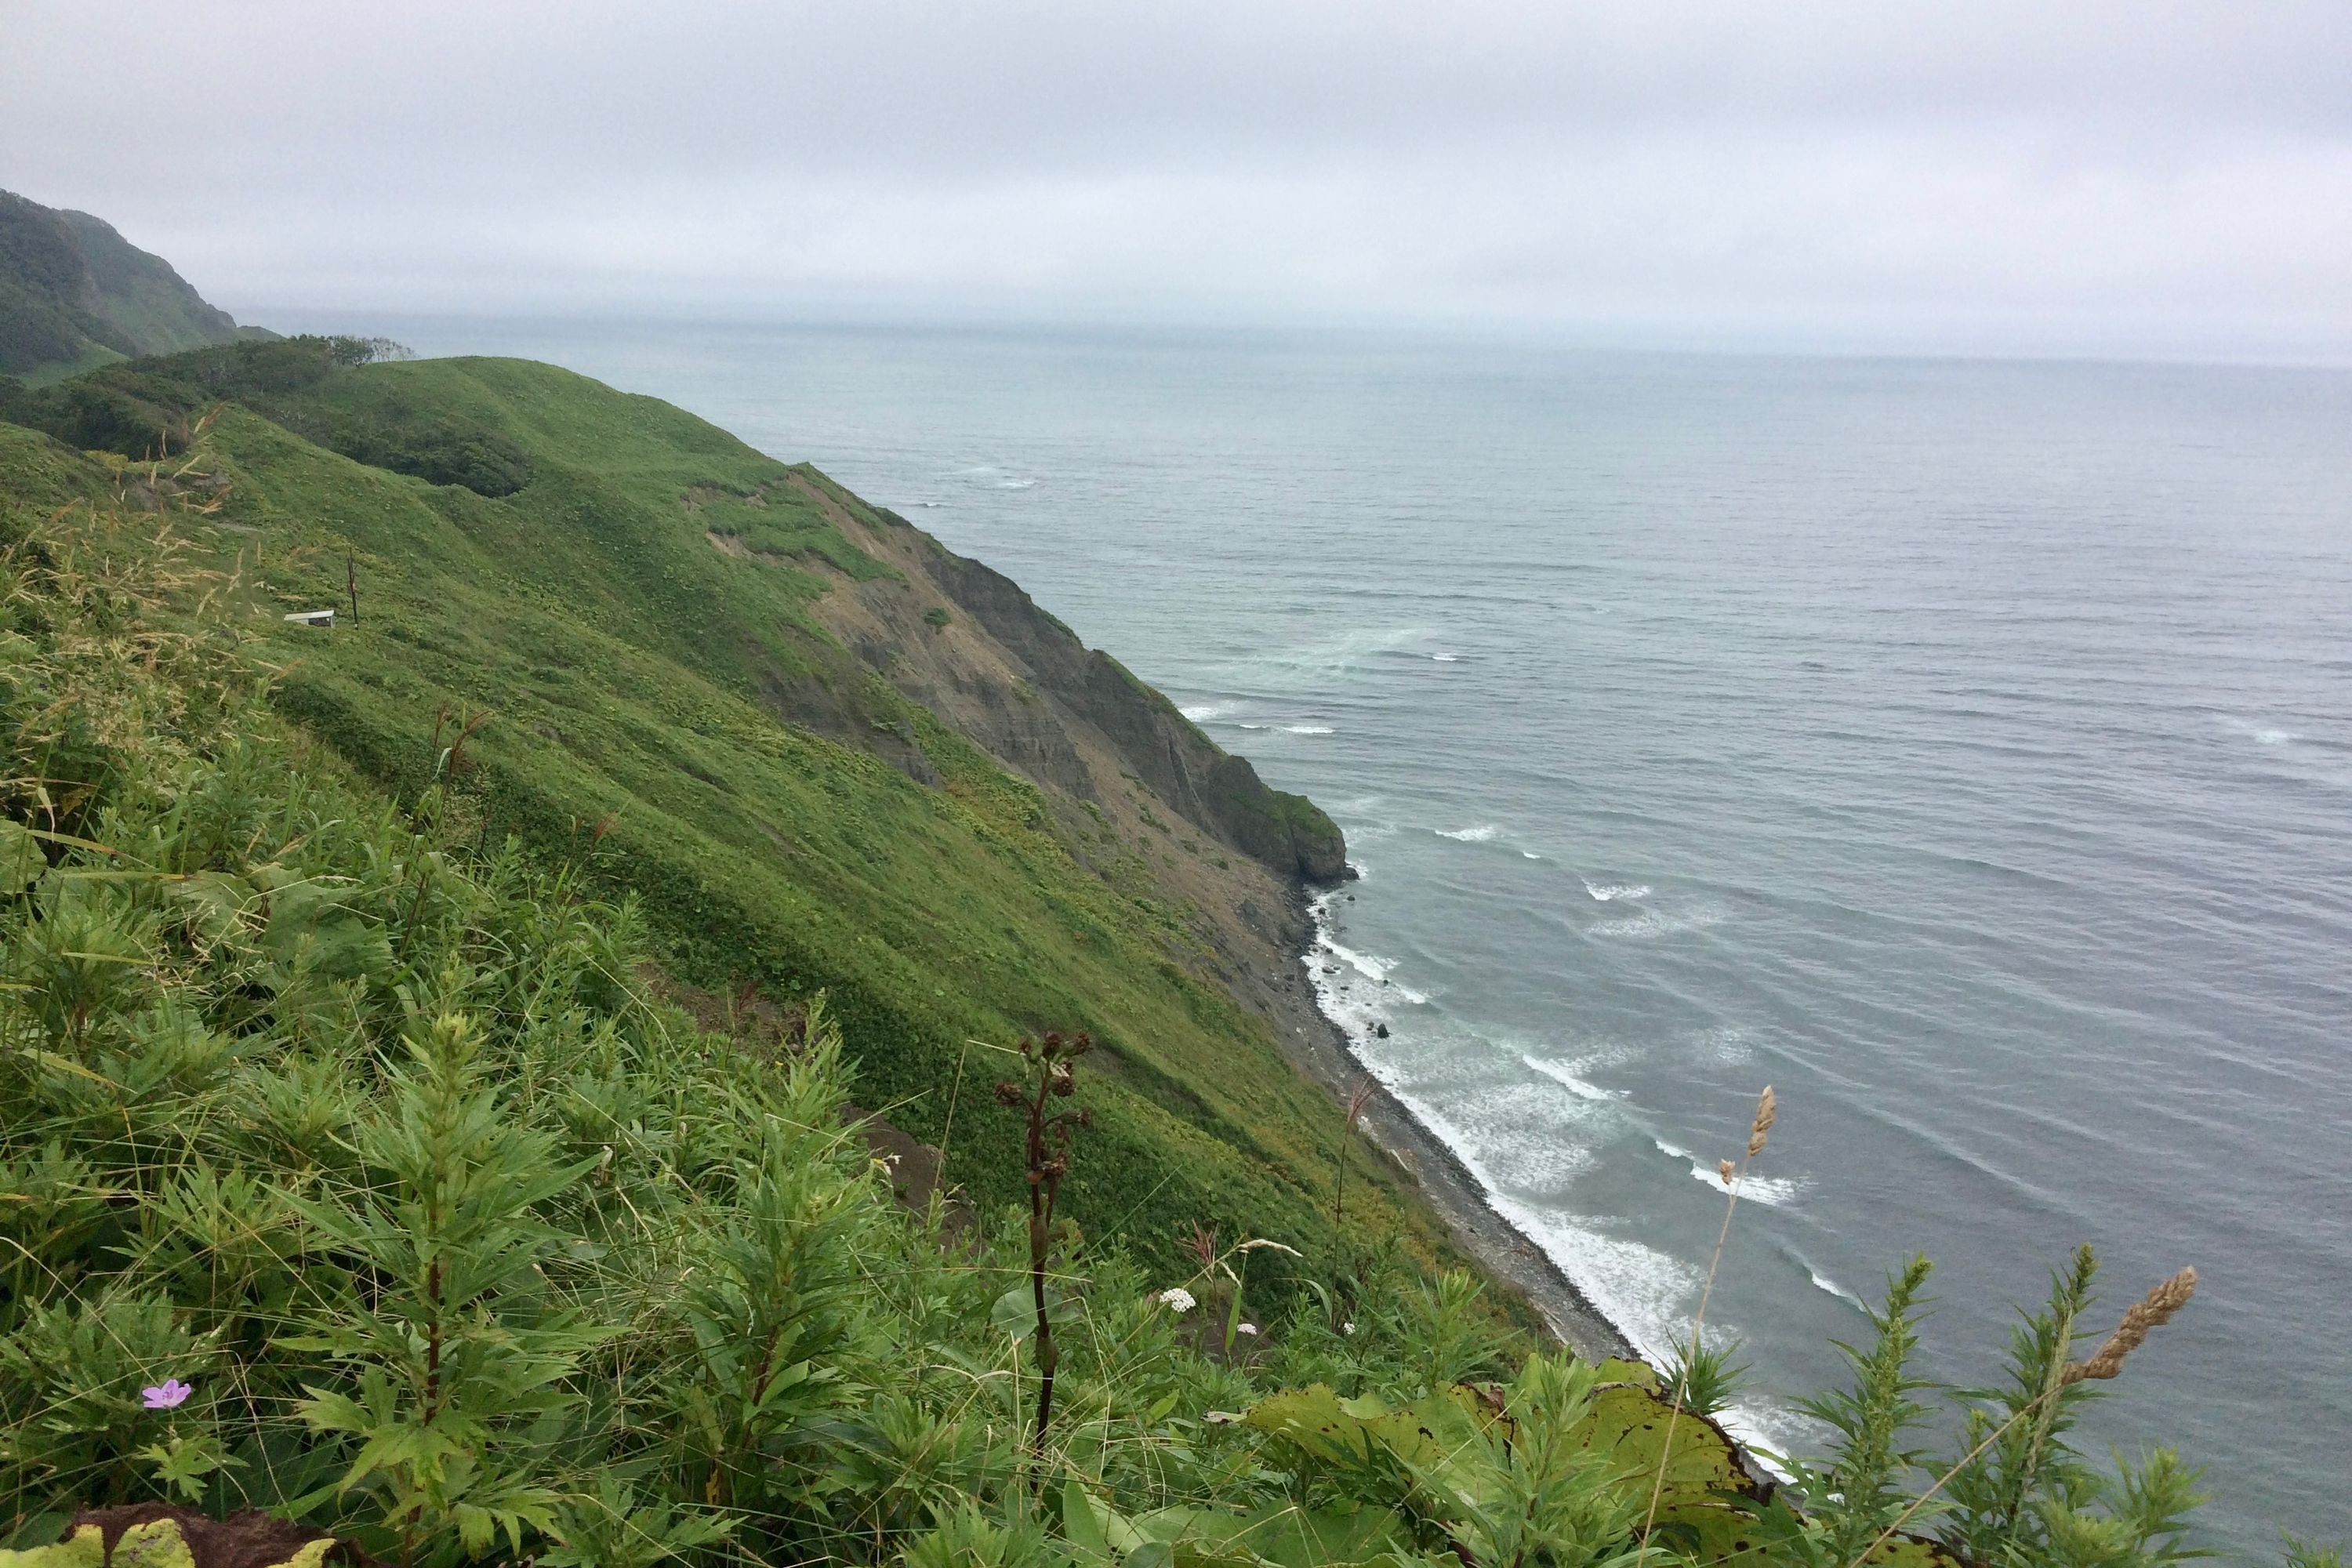 Steep, verdant cliffs fall away to the grey Pacific Ocean.